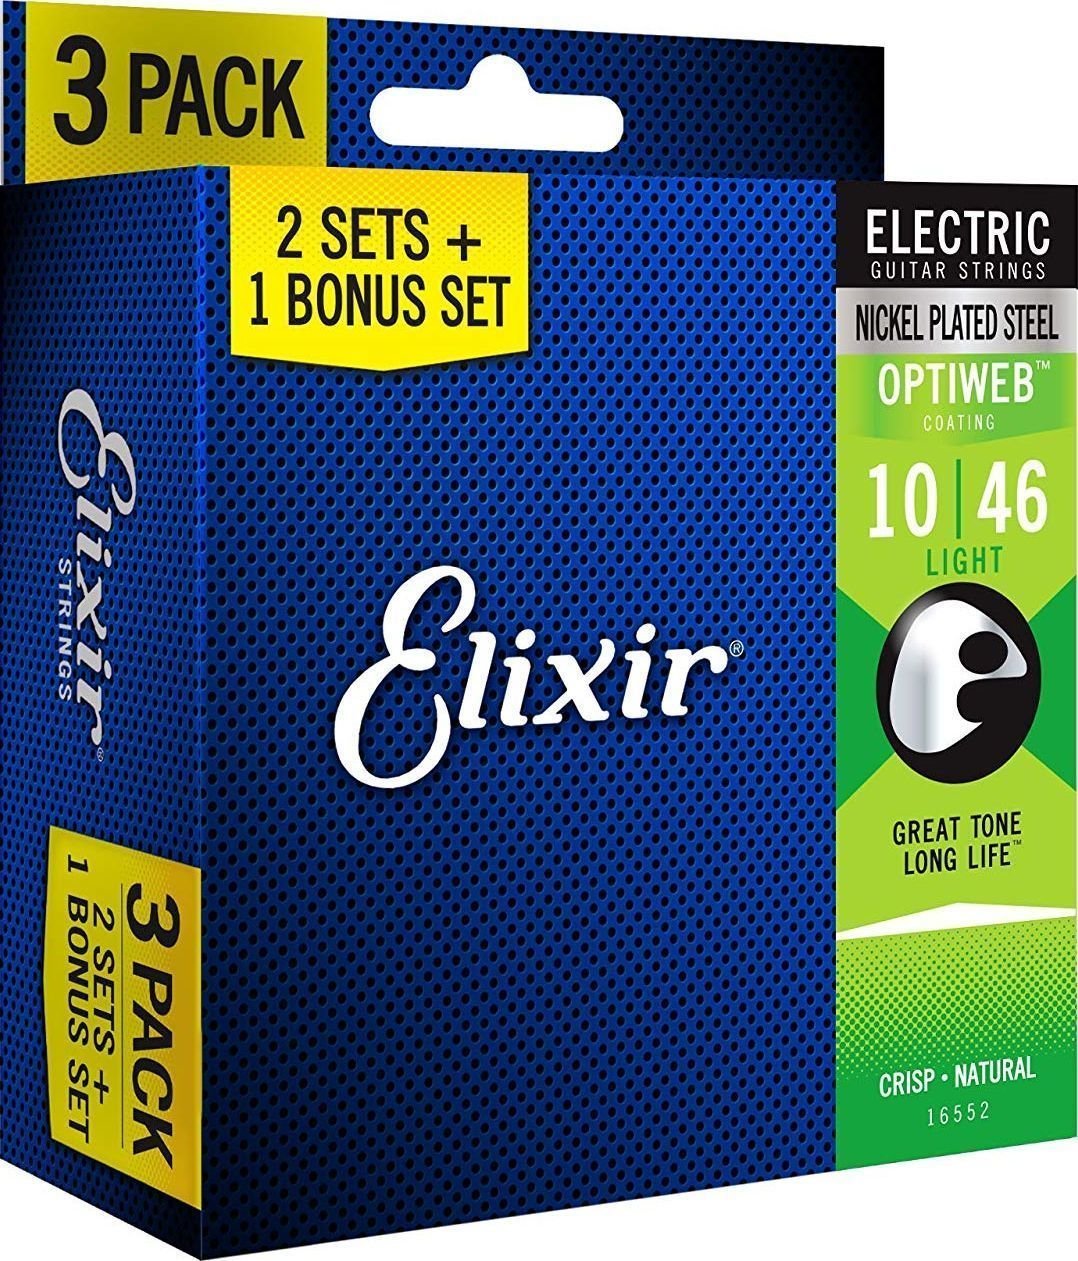 Elektromos gitárhúrok Elixir 16552 OPTIWEB Coating Light 10-46 3-PACK